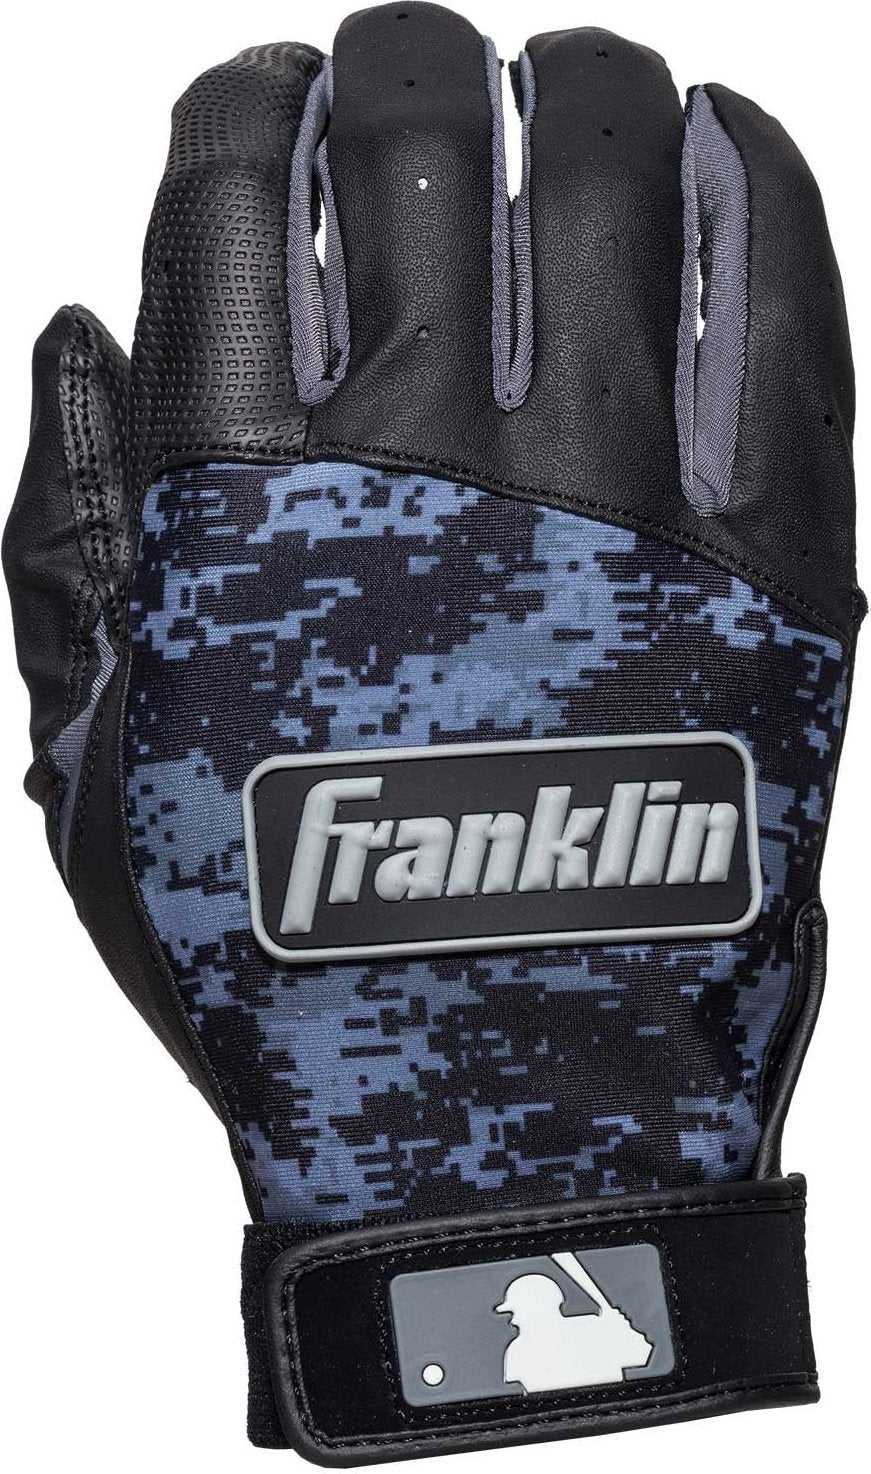 Franklin Digitek Youth Batting Gloves - Black Black Camo - HIT a Double